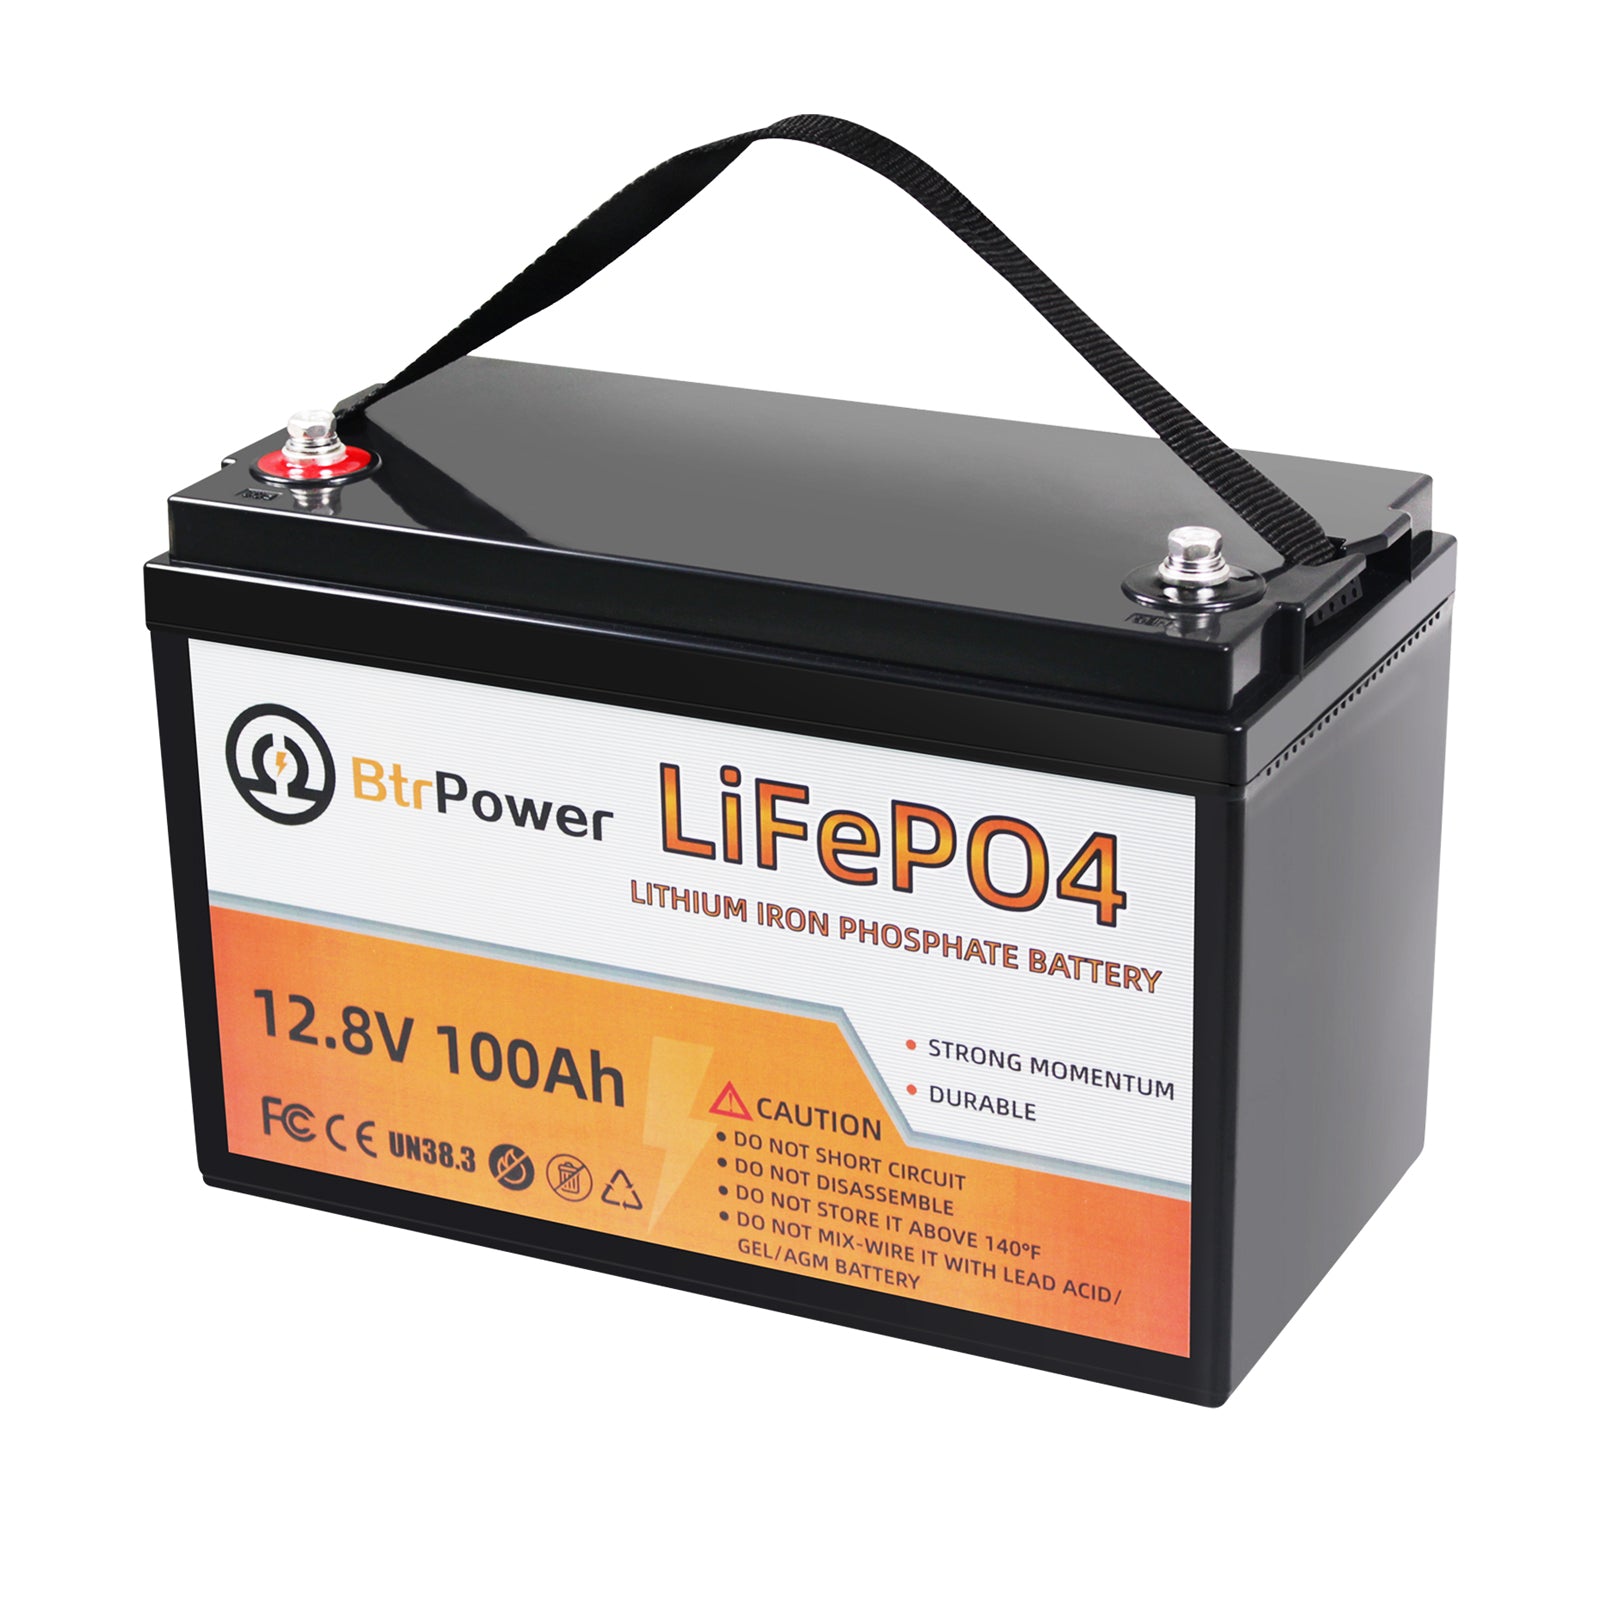 Rich Solar RV 12V 100Ah LiFePO4 Lithium Iron Phosphate Battery